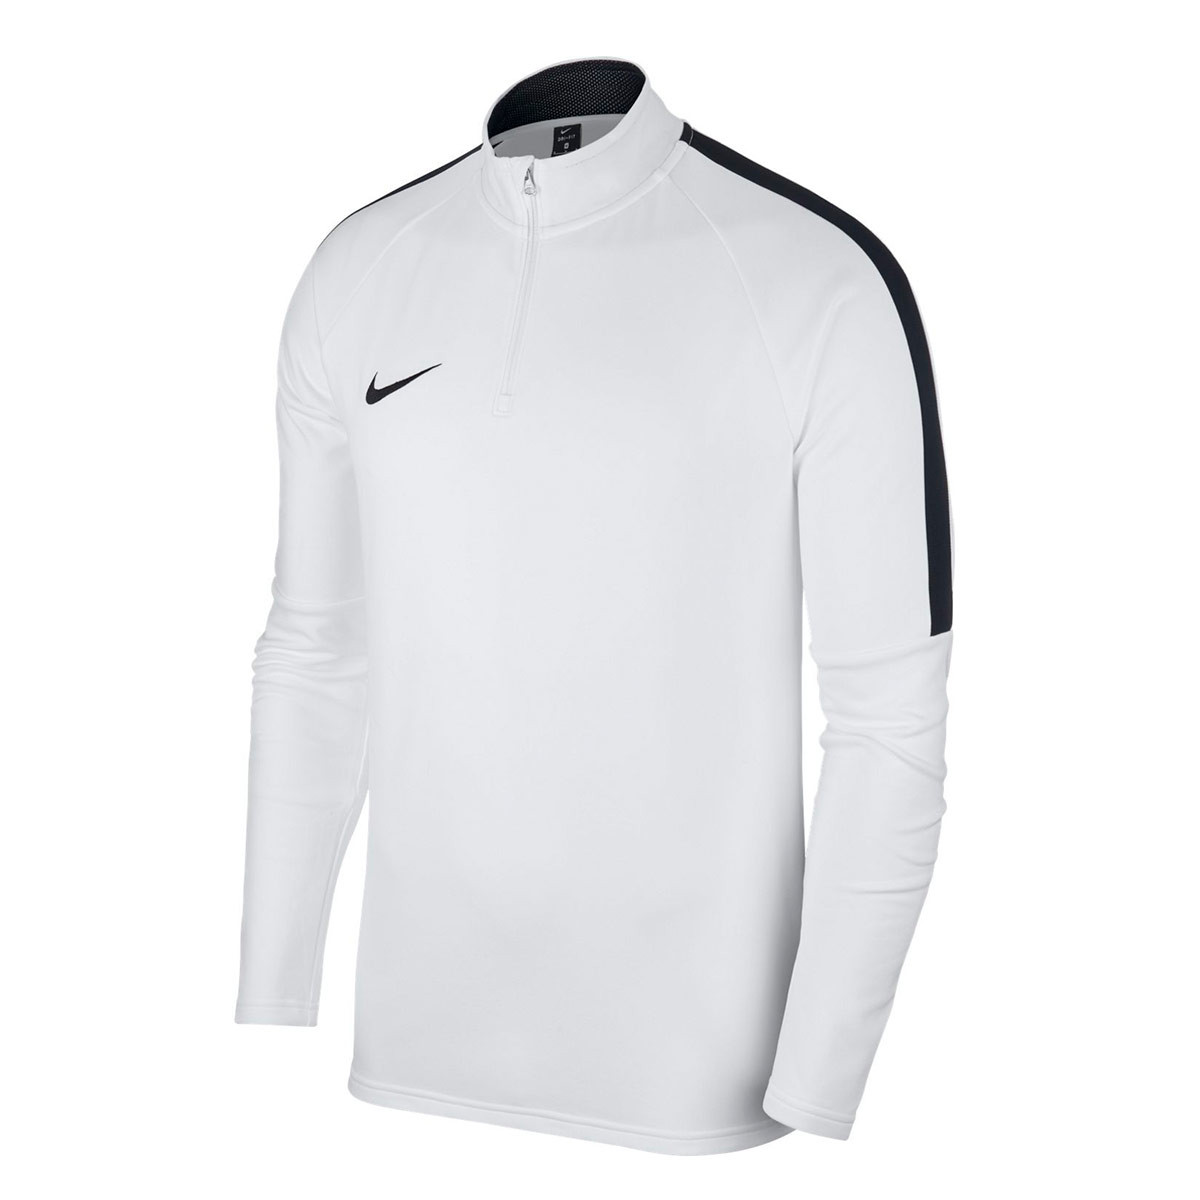 nike football academy half zip sweat in white with black side stripe